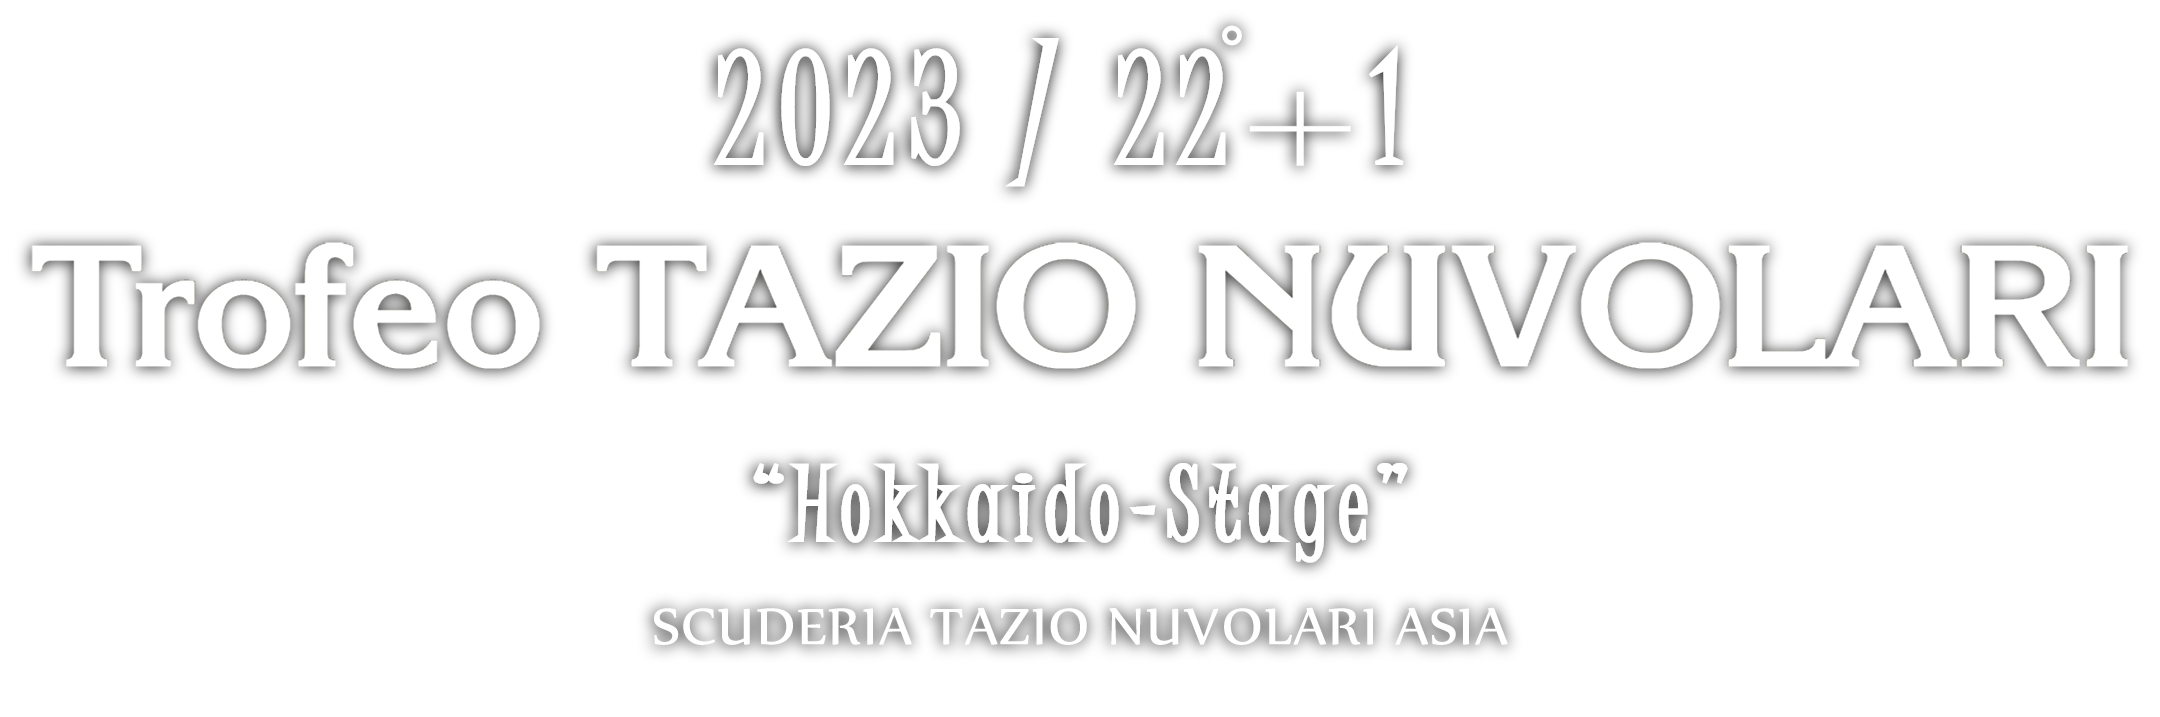 21th .+1 Trofeo TAZIO NUVOLARI Hokkaido-Stage